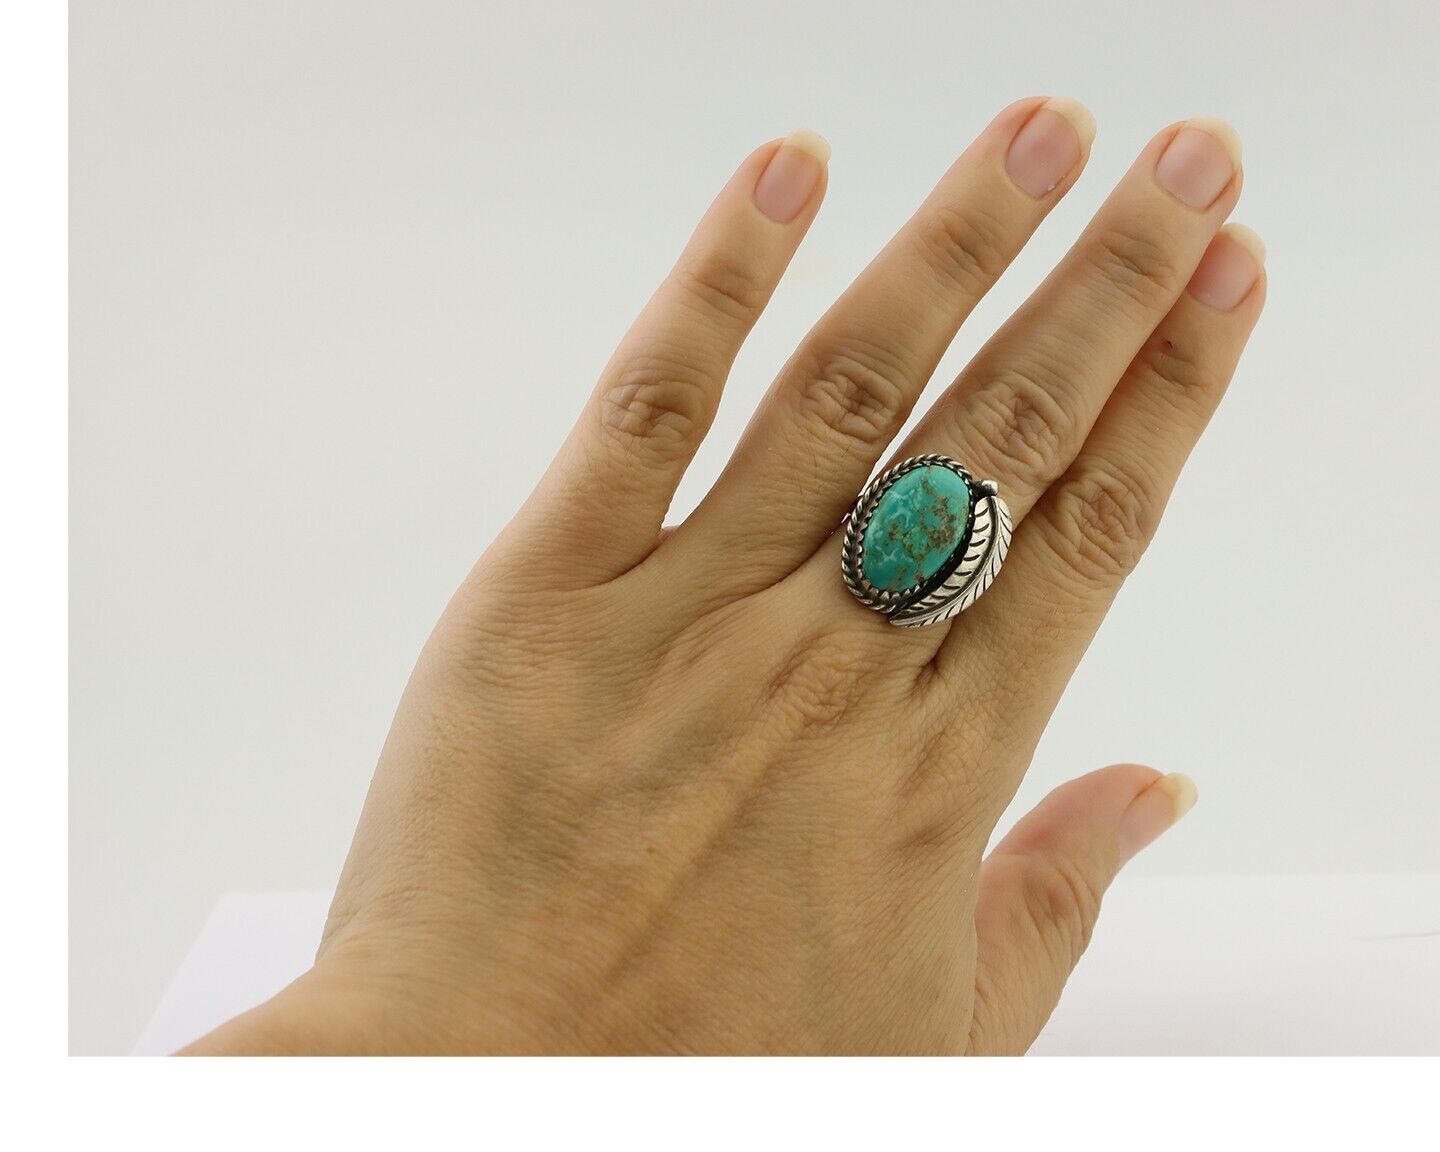 Navajo Ring 925 Silver Green Kingman Turquoise Native American Artist C.80's